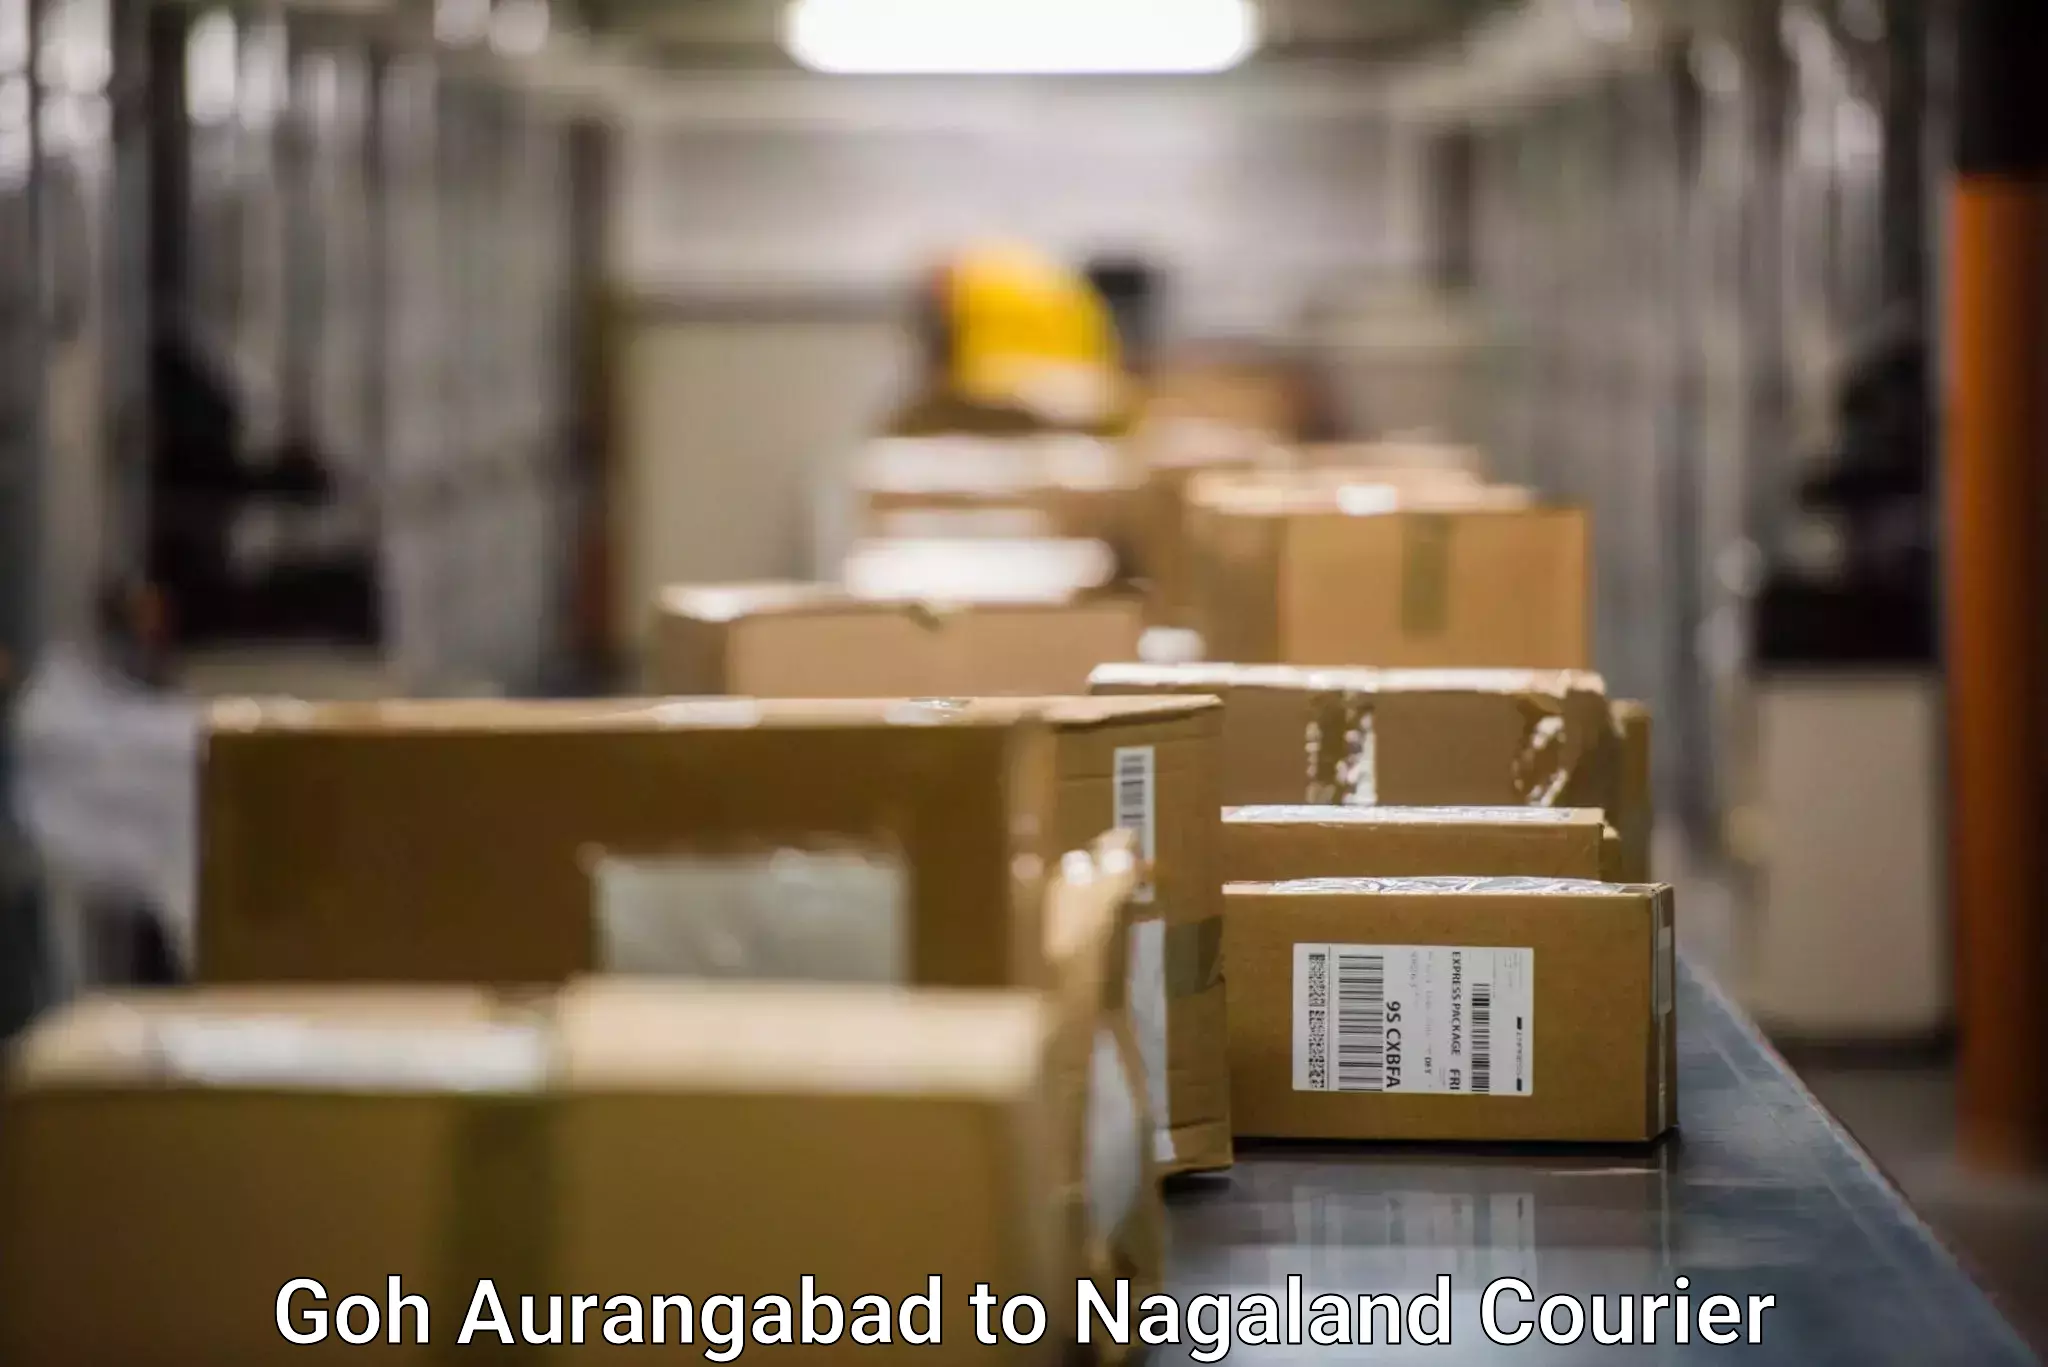 Courier service innovation Goh Aurangabad to Nagaland